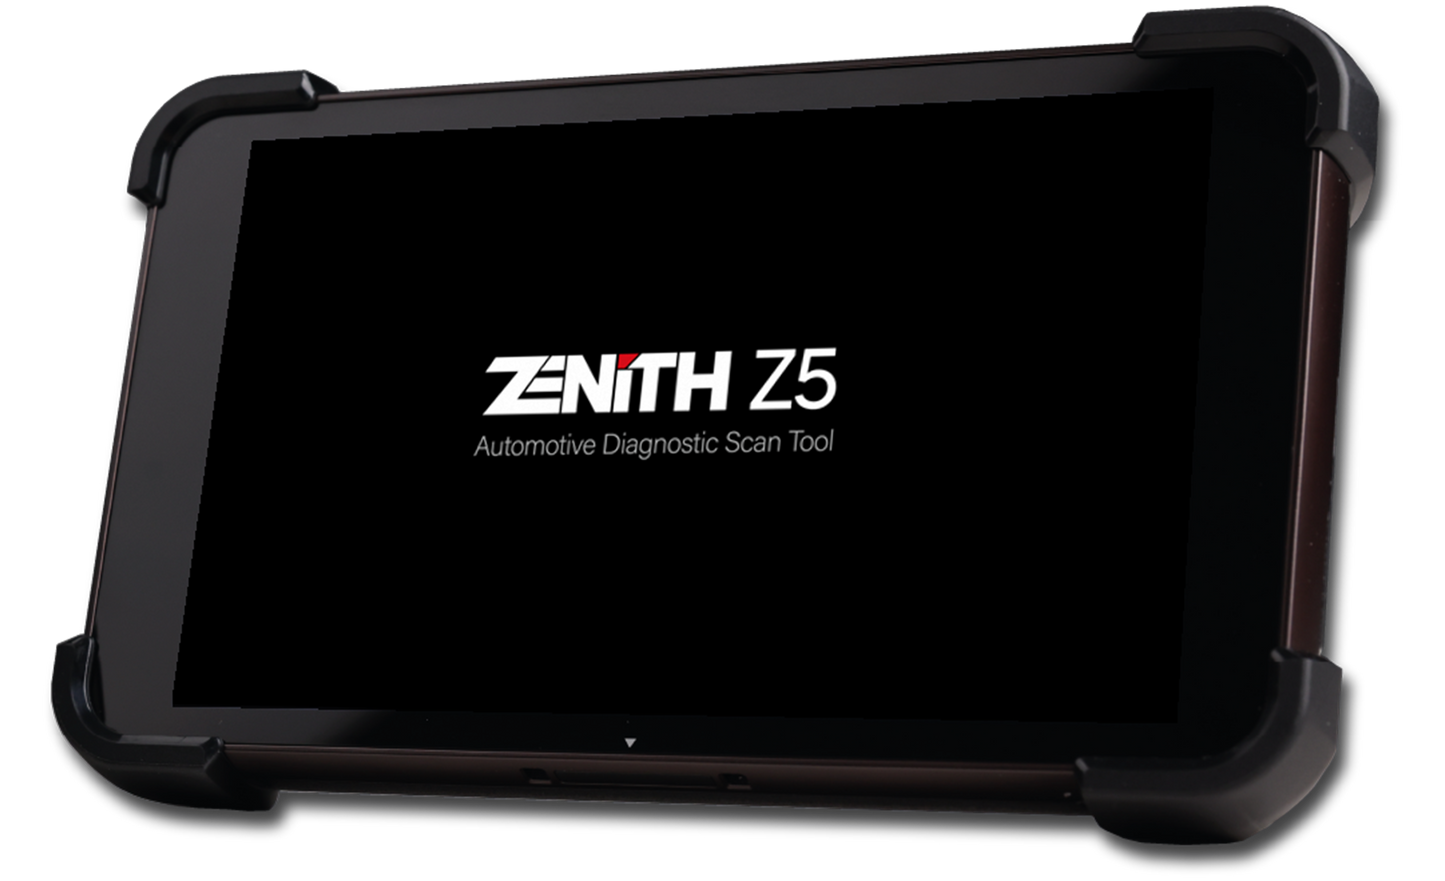 Zenith Z5